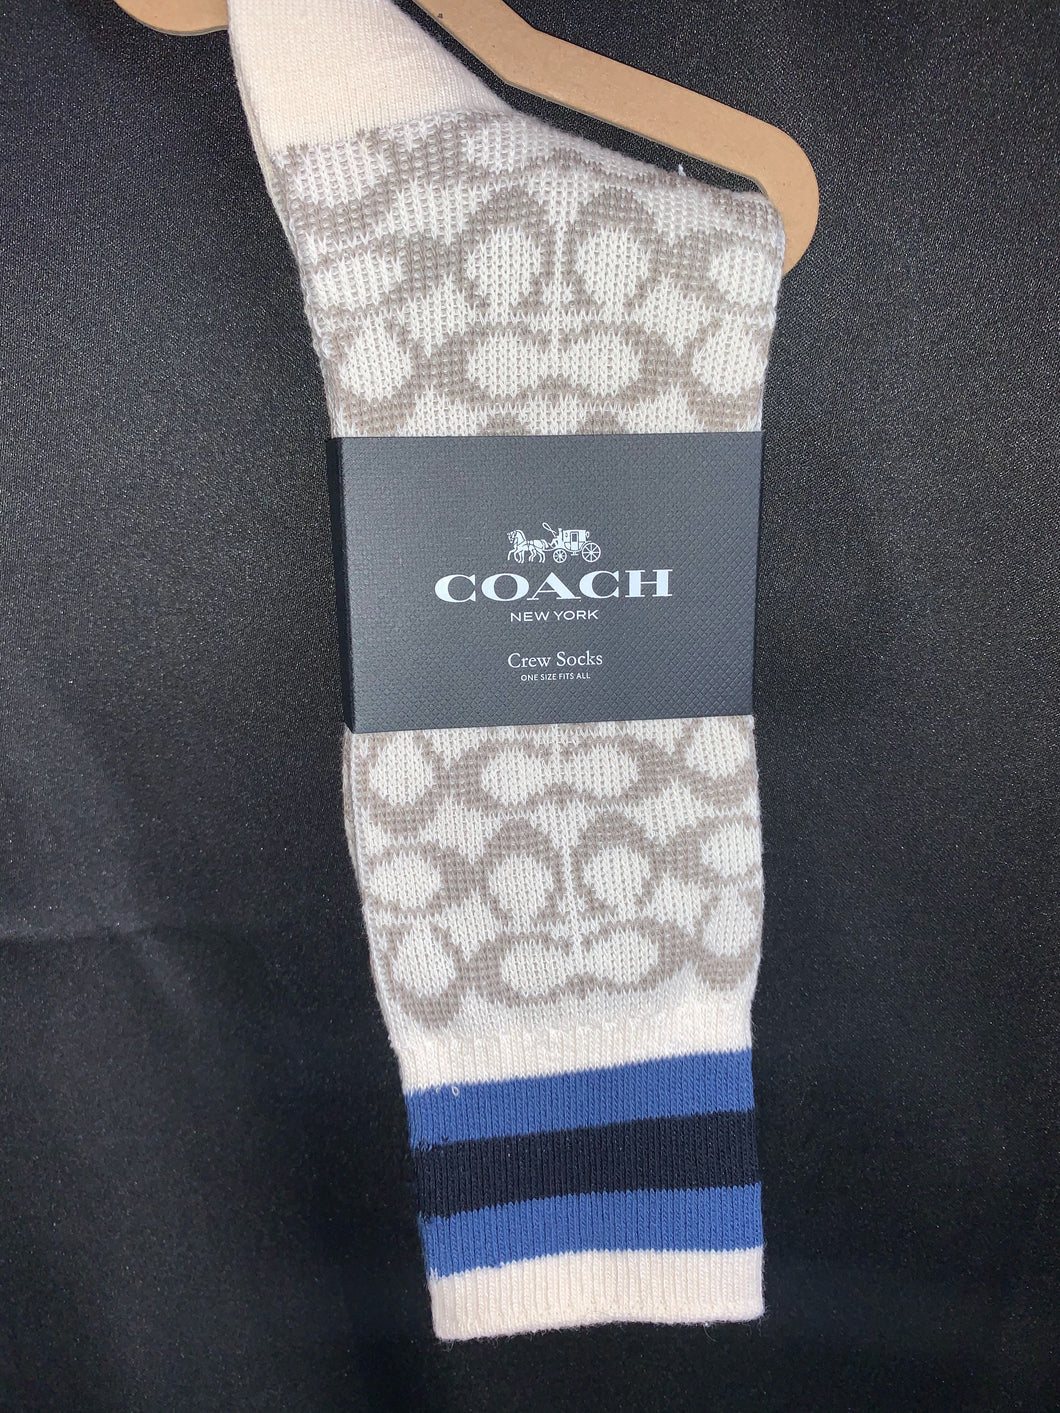 Coach unisex socks